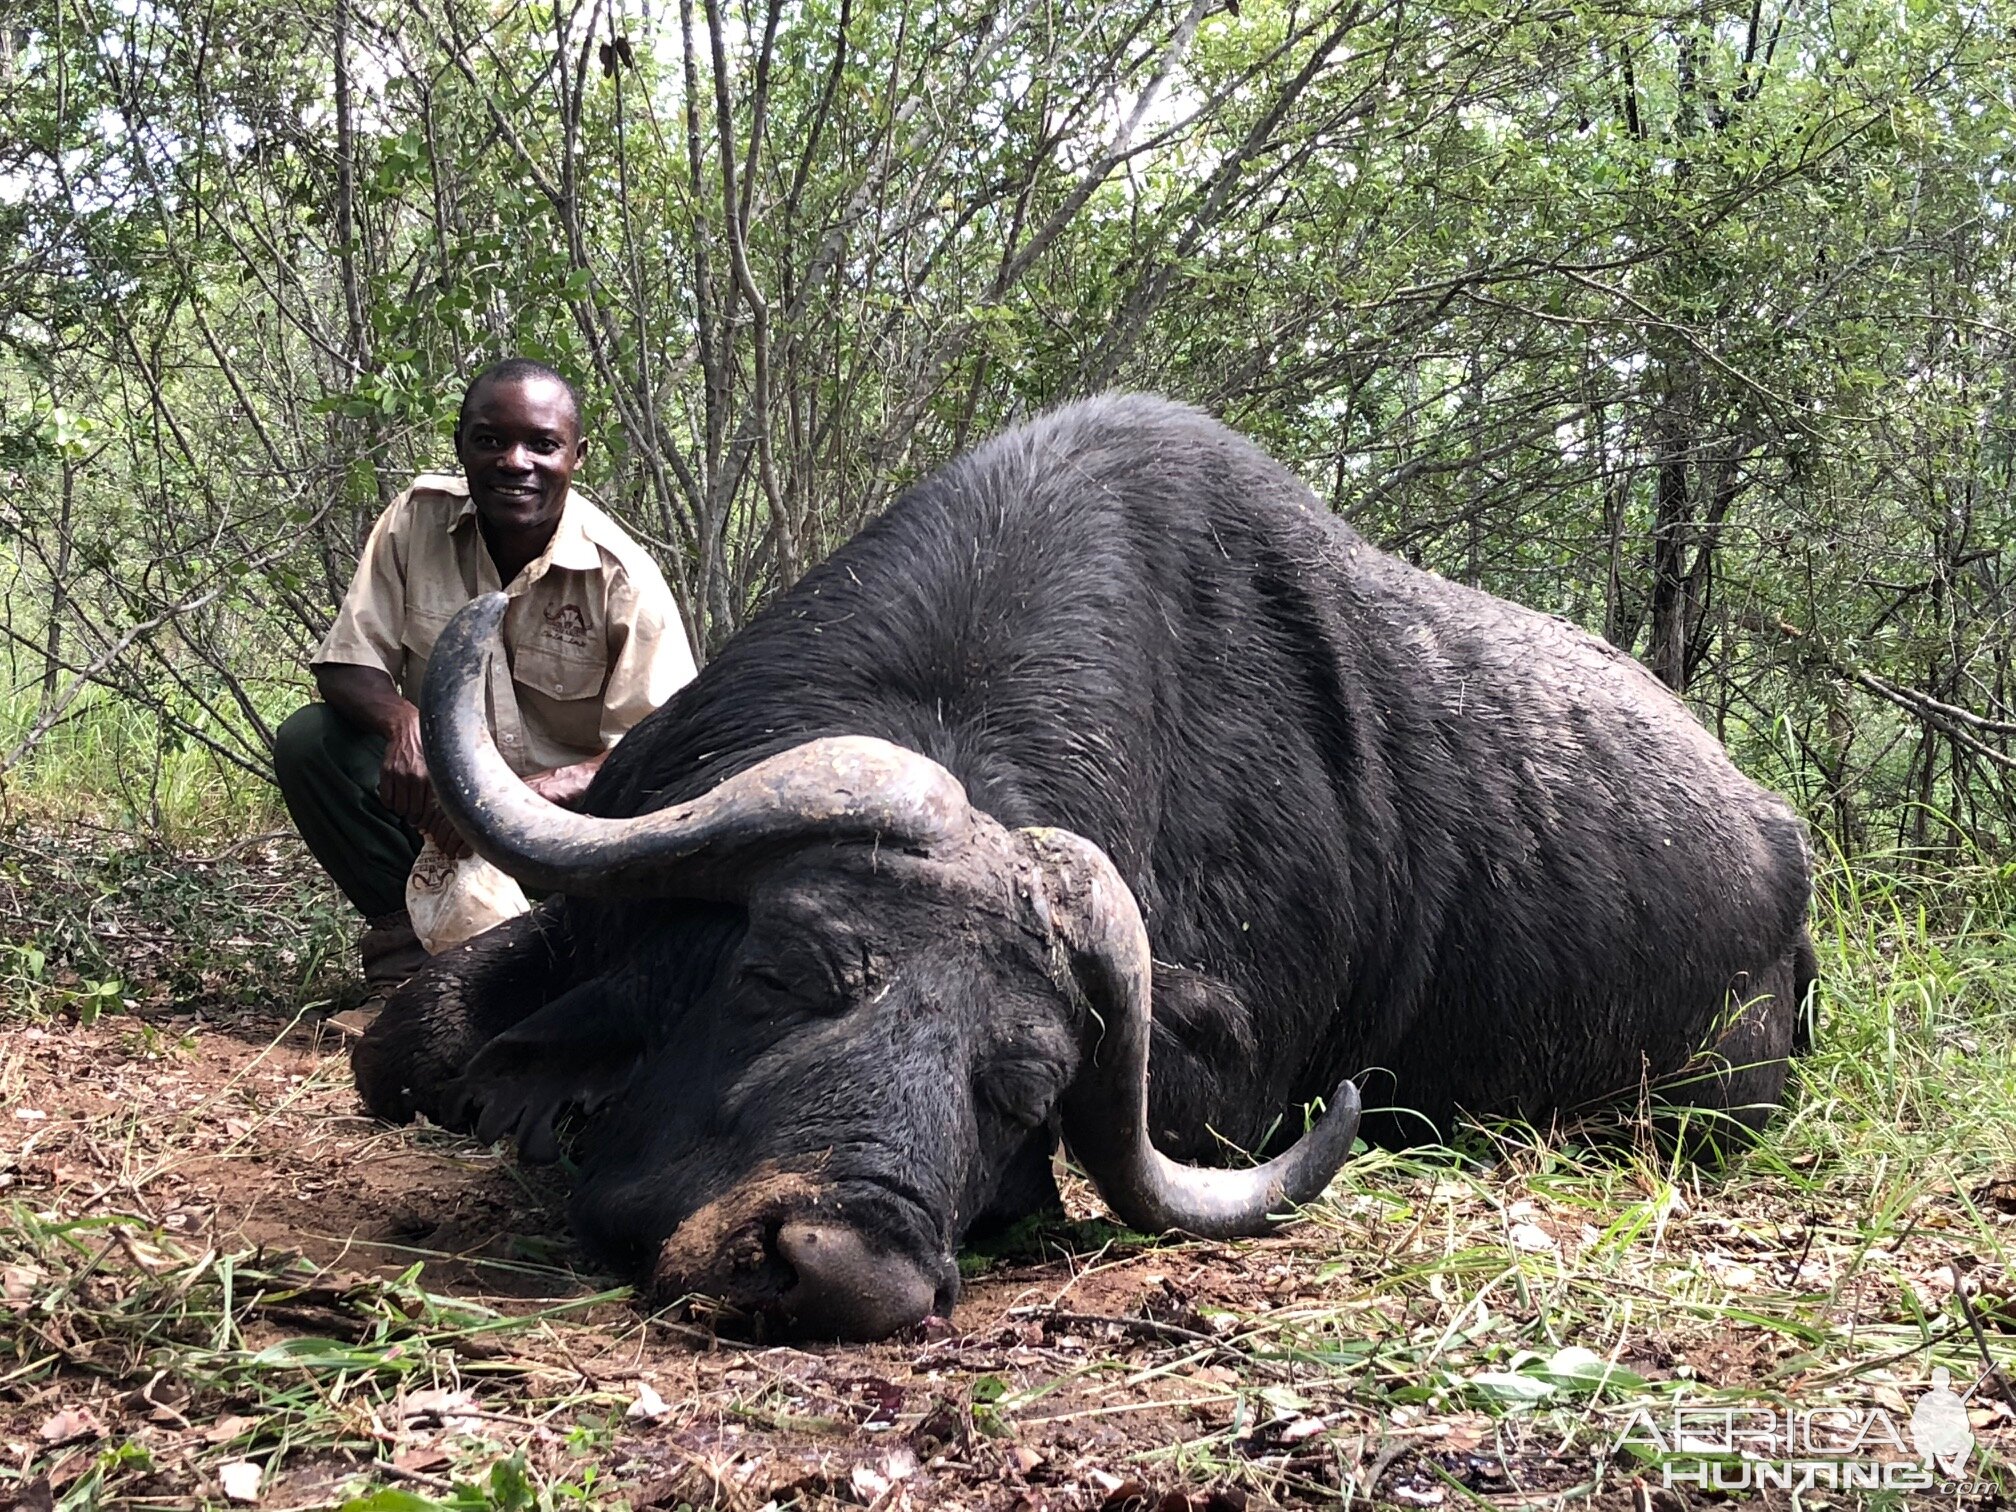 Cape Buffalo Hunting in Zimbabwe